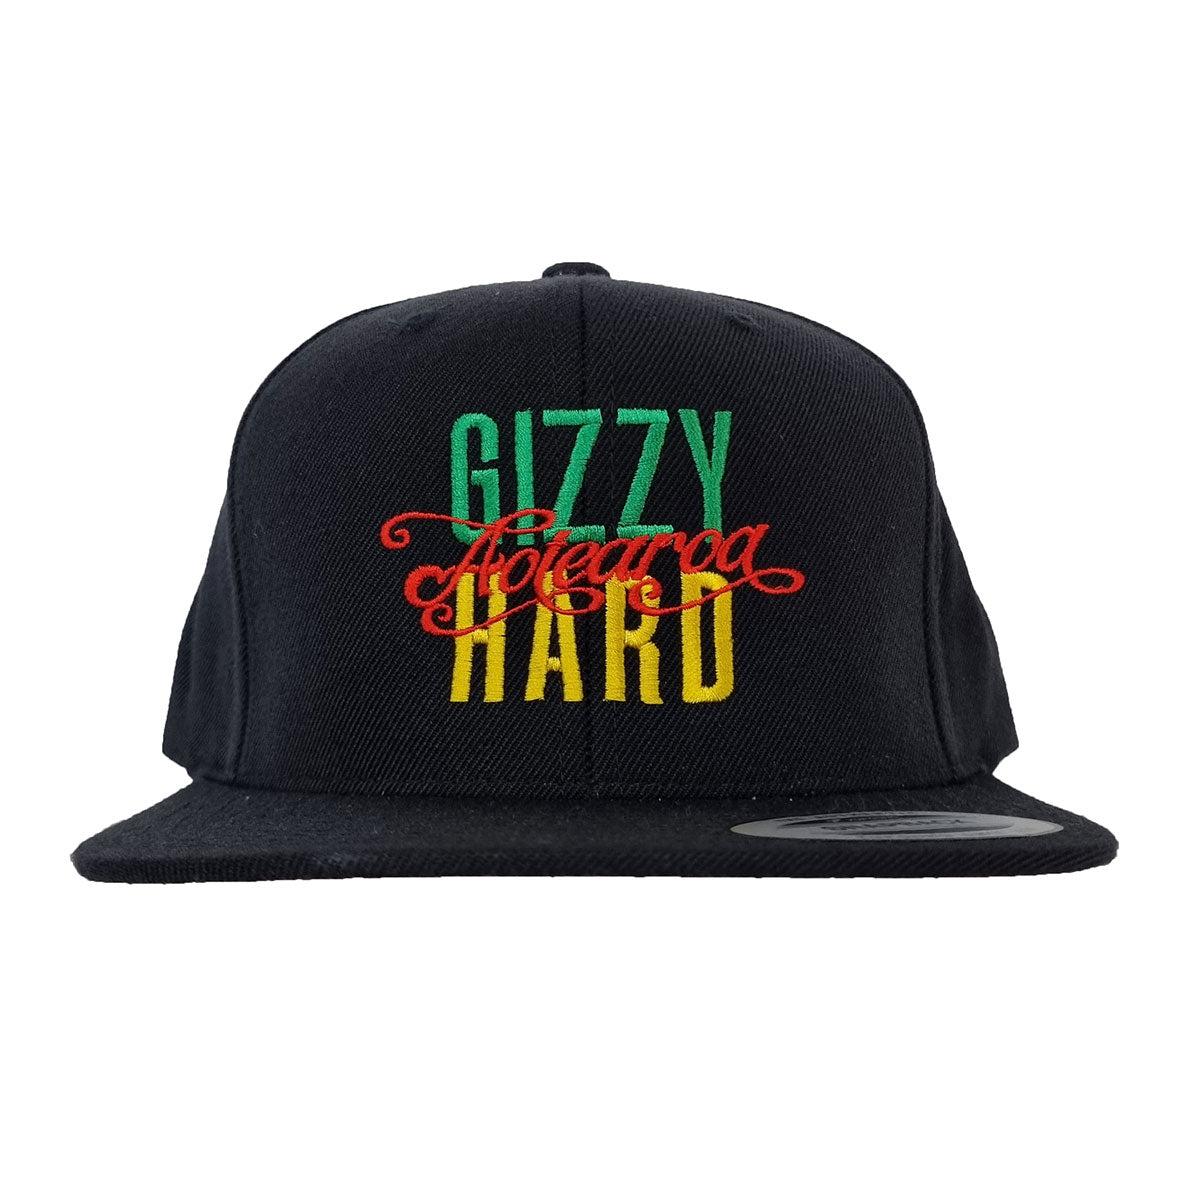 Gizzy Hard Aotearoa Flexfit Flat Peak SB Cap black with rasta  logo